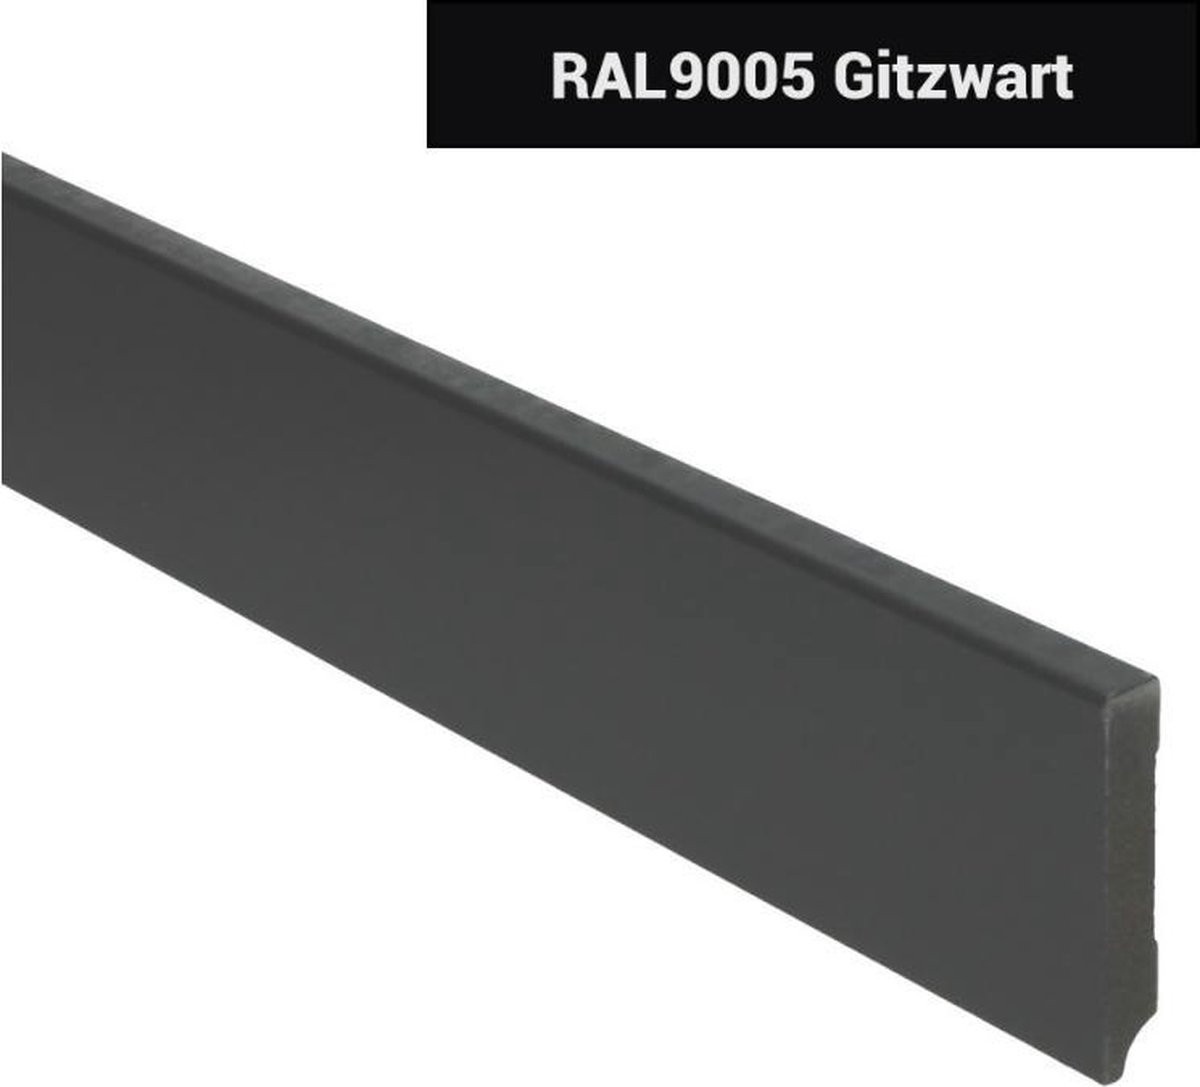 Hoge plinten - MDF - Moderne plint 70x12 mm - Zwart - Voorgelakt - RAL 9005 - Per 5 stuks 2,4m